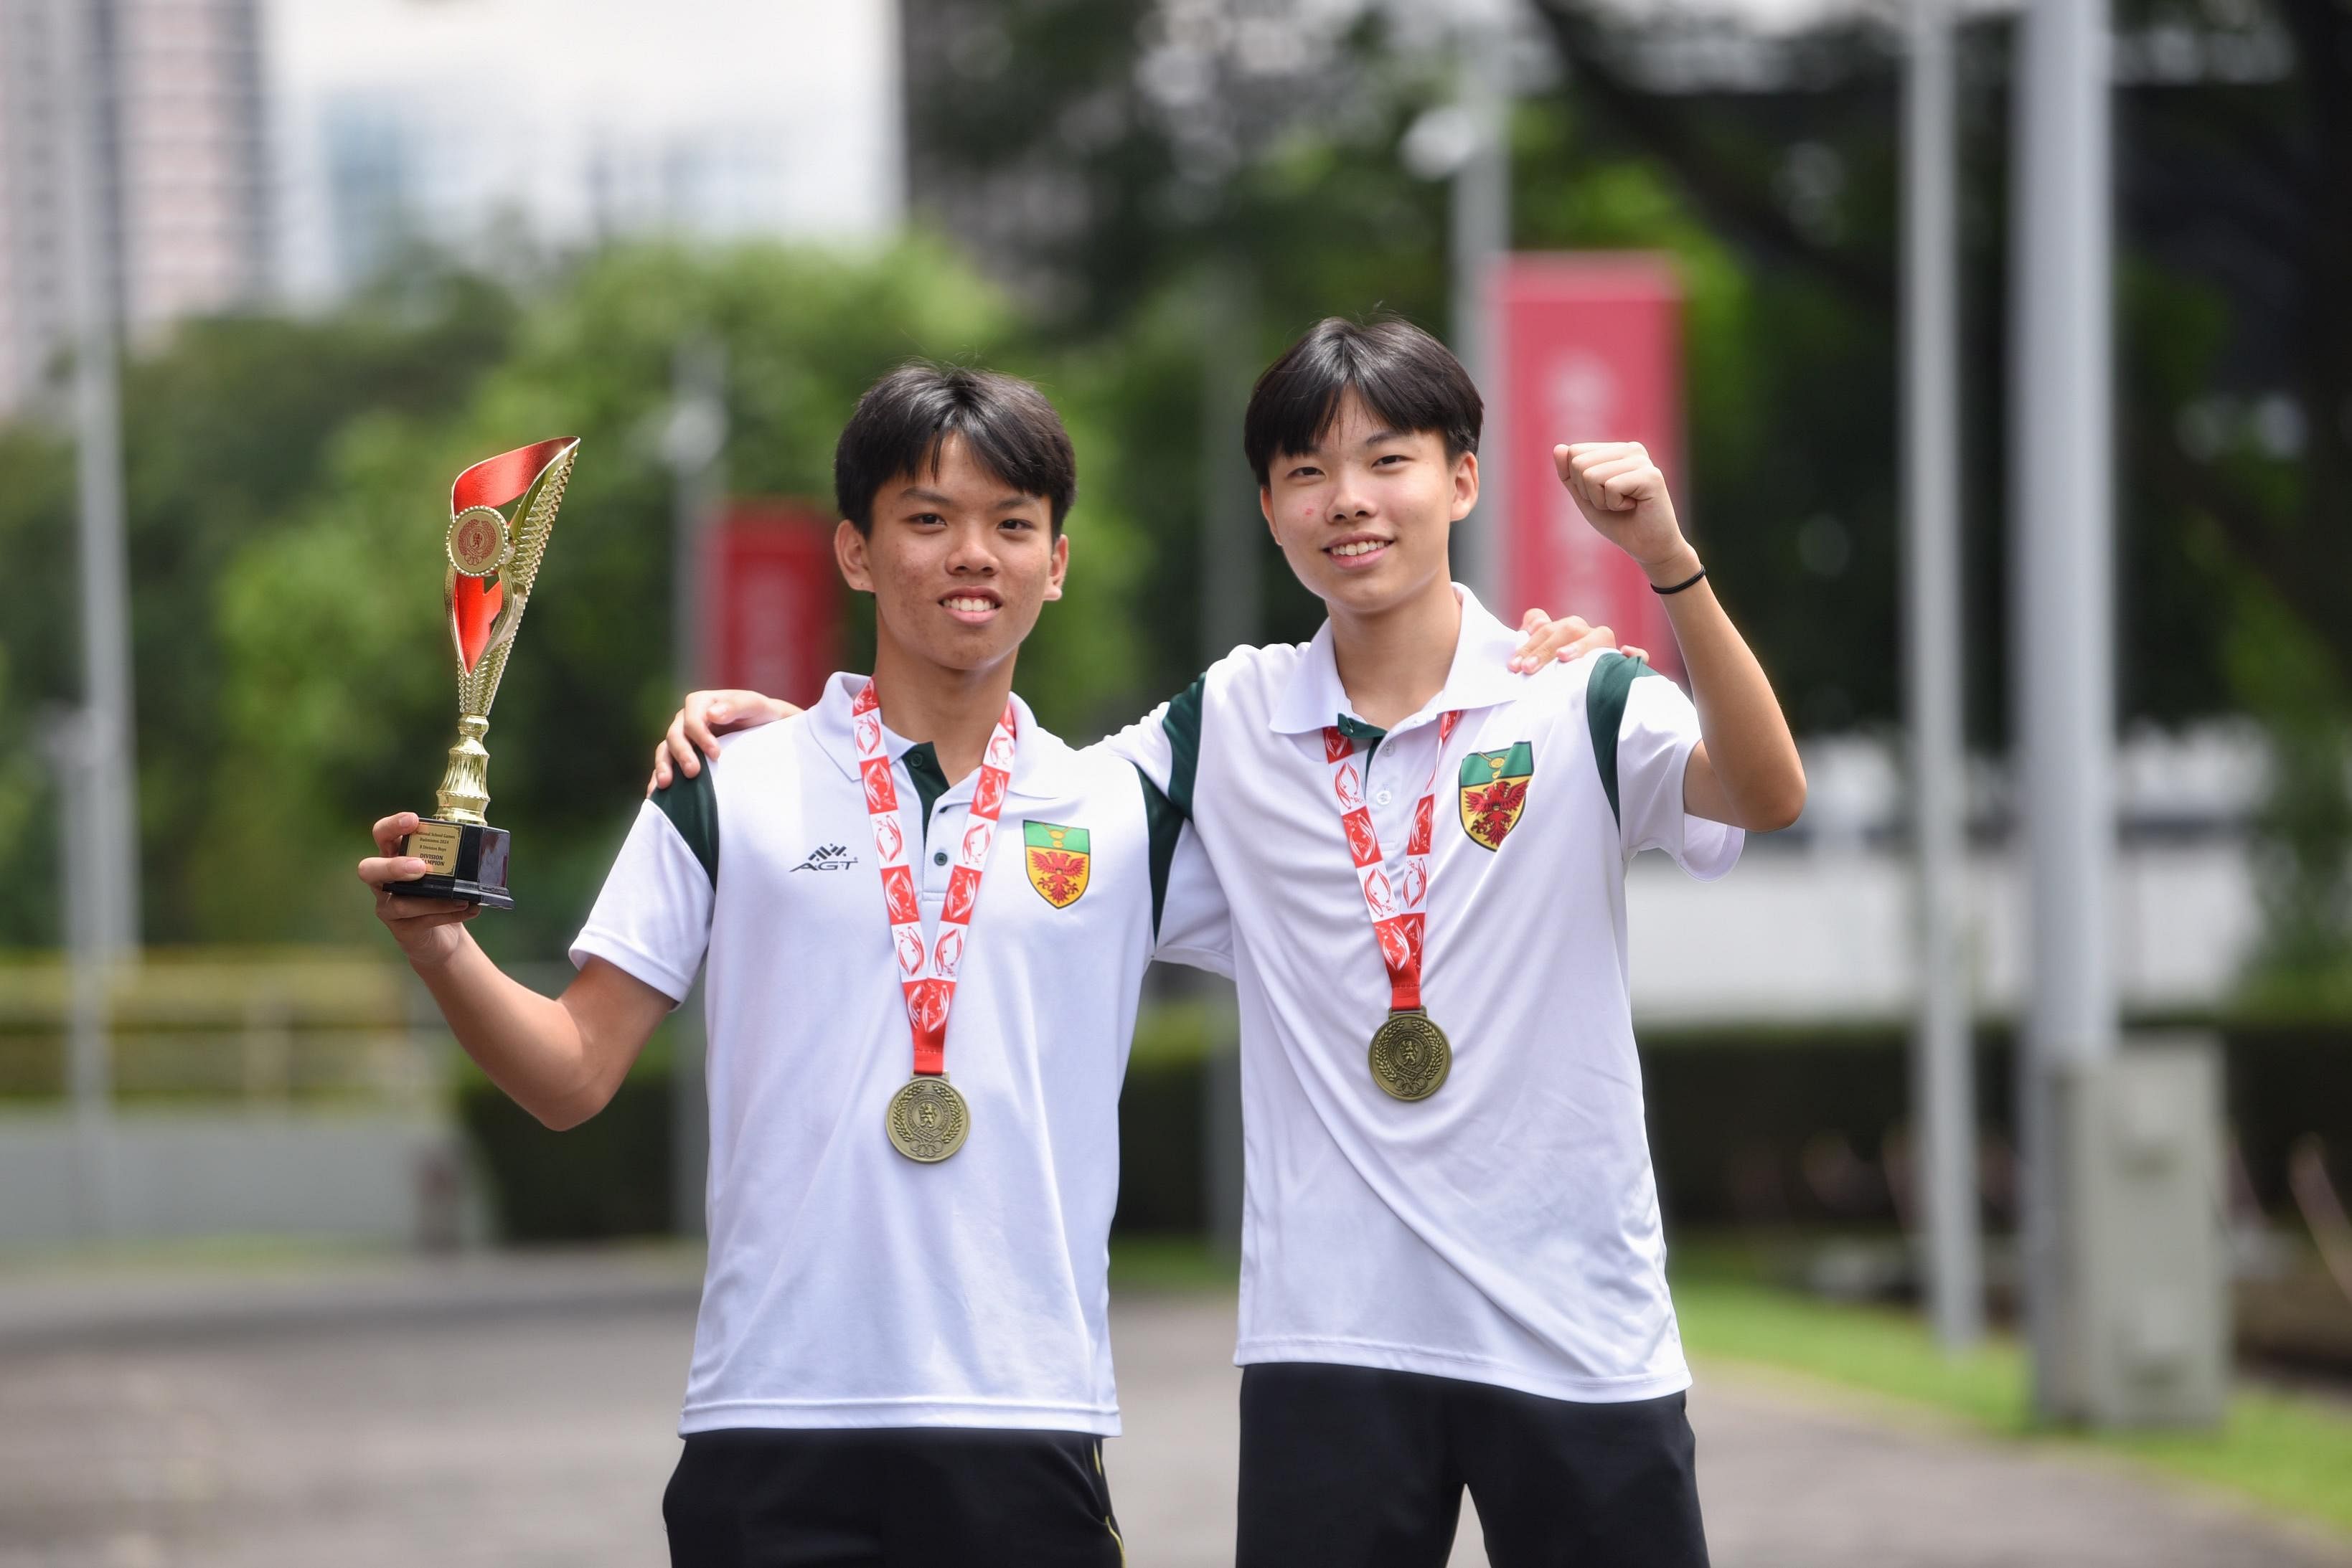 Friendship the winning formula for RI’s Kaiser Lim and Sheldric Lim in B Division boys’ badminton triumph